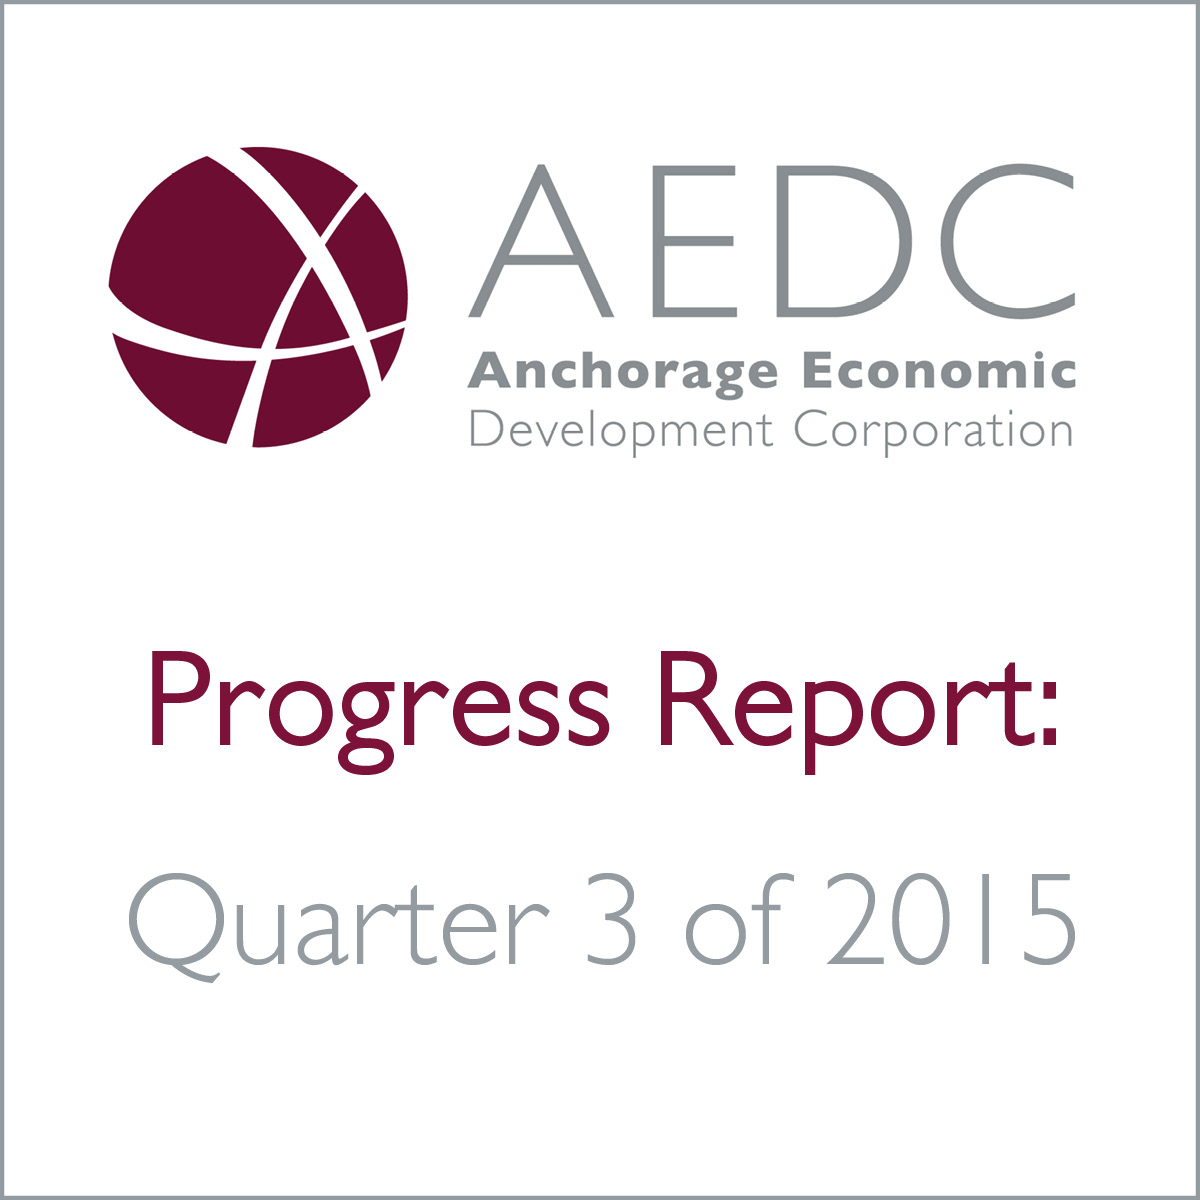 AEDC Progress Report: 2015 Q3